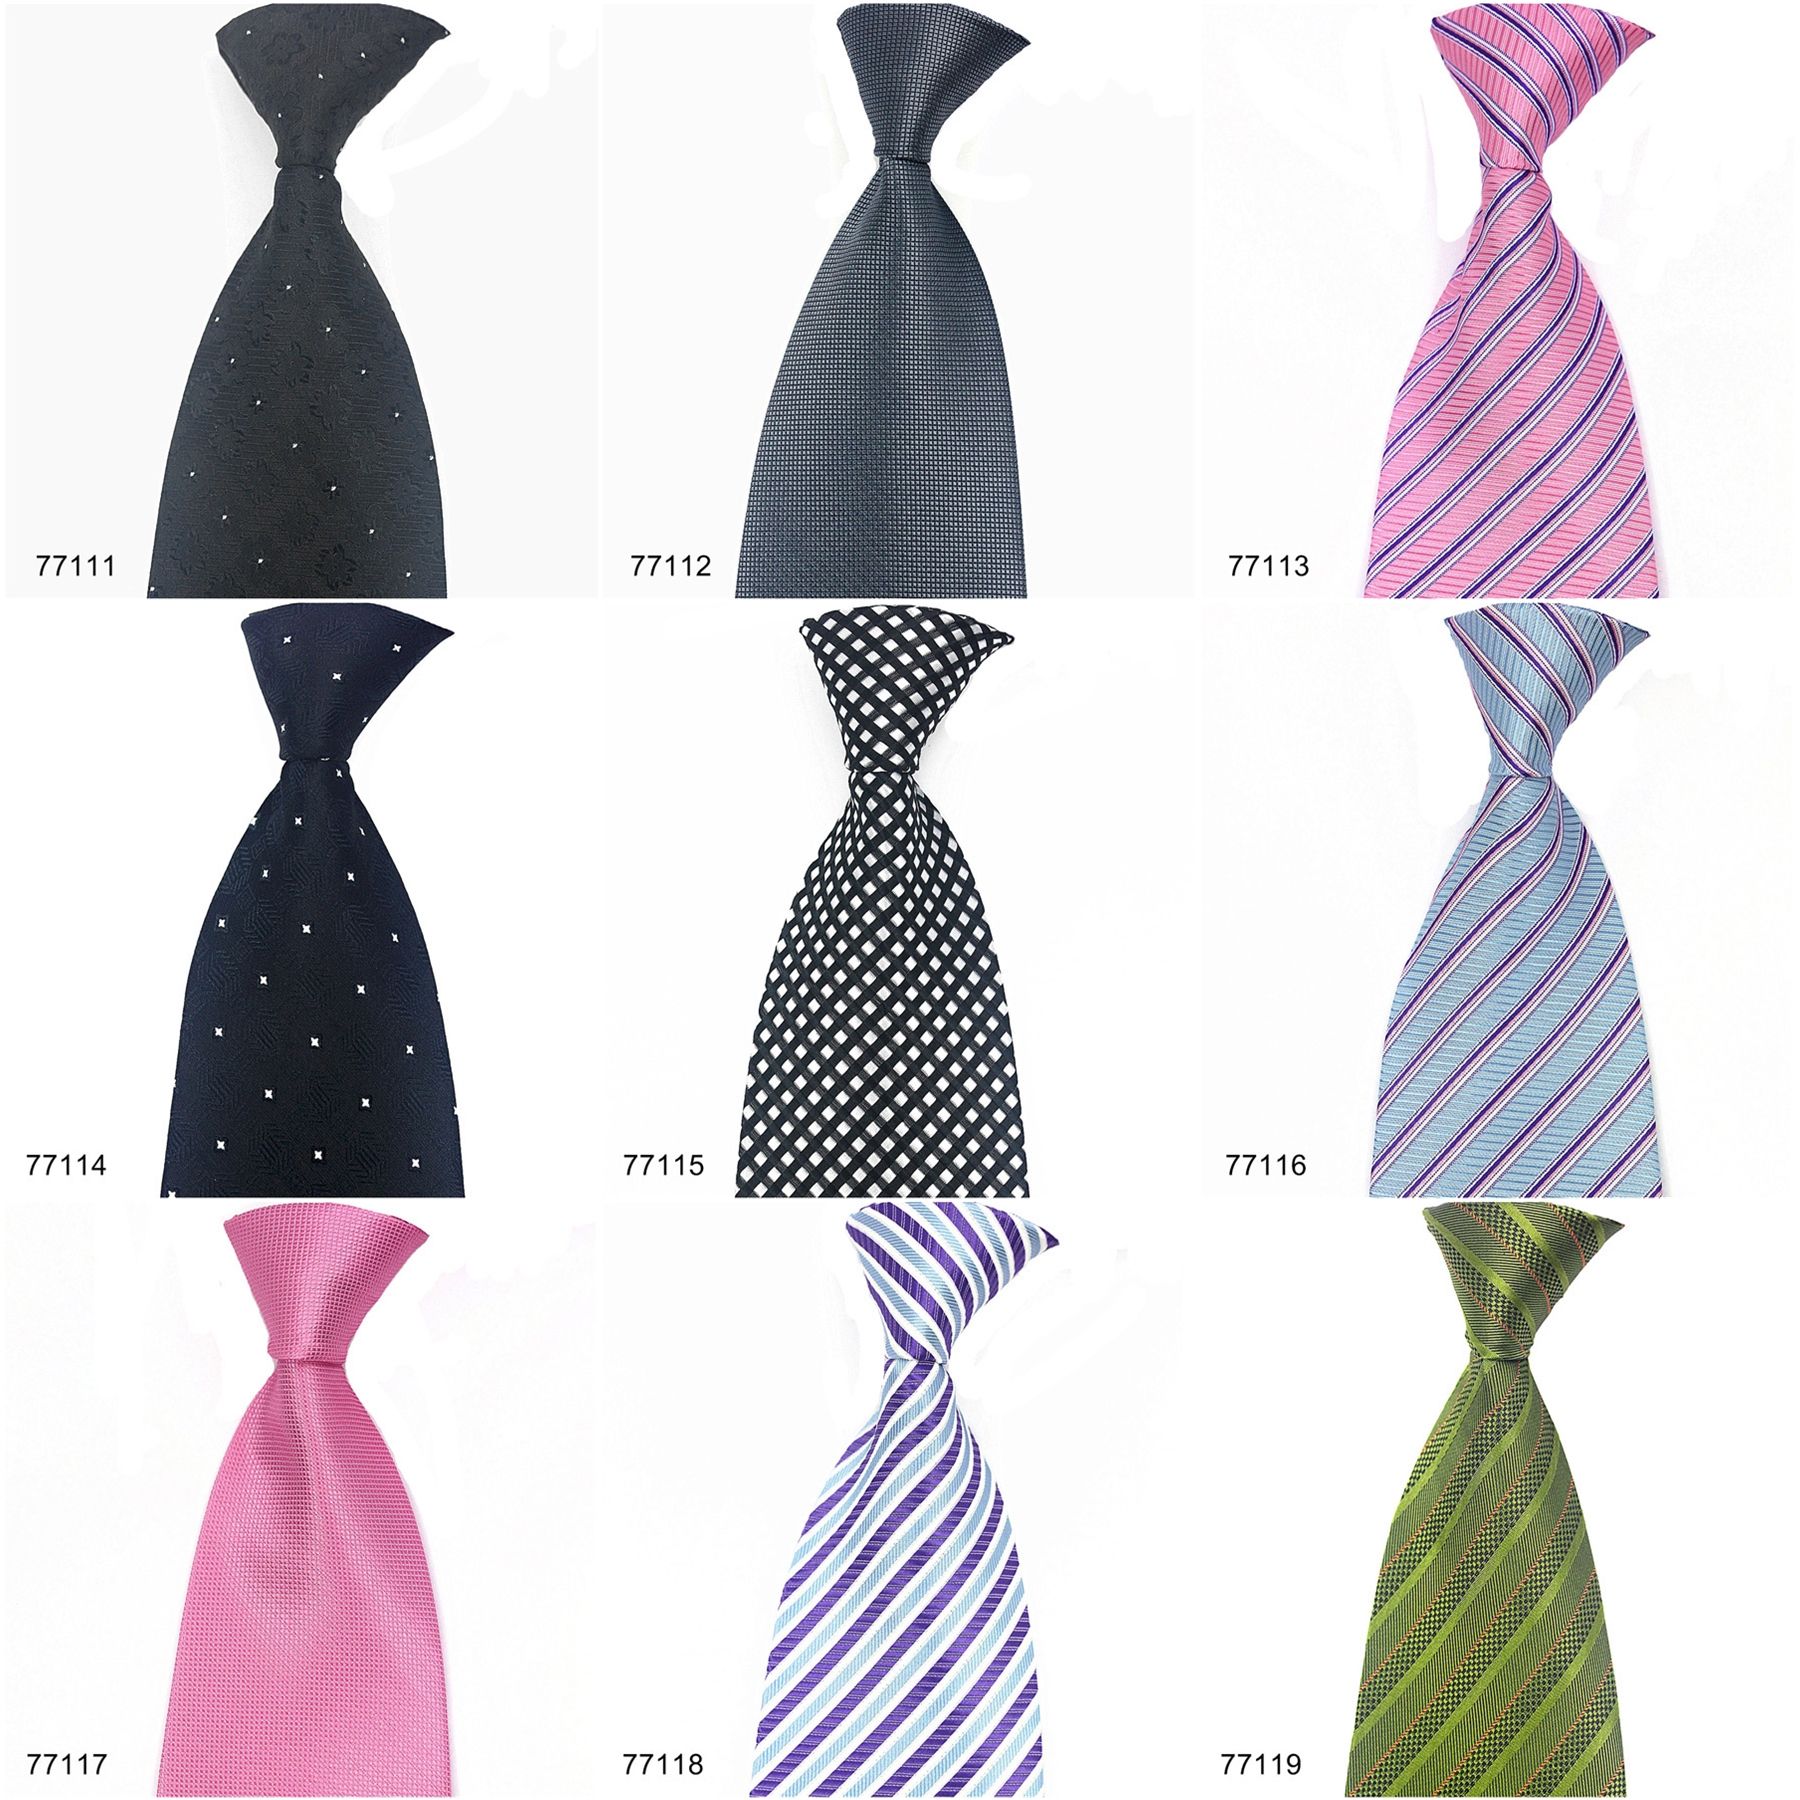 New Arrival In Stock Ties For Men 100% Silk Necktie Fashion Accessories ...